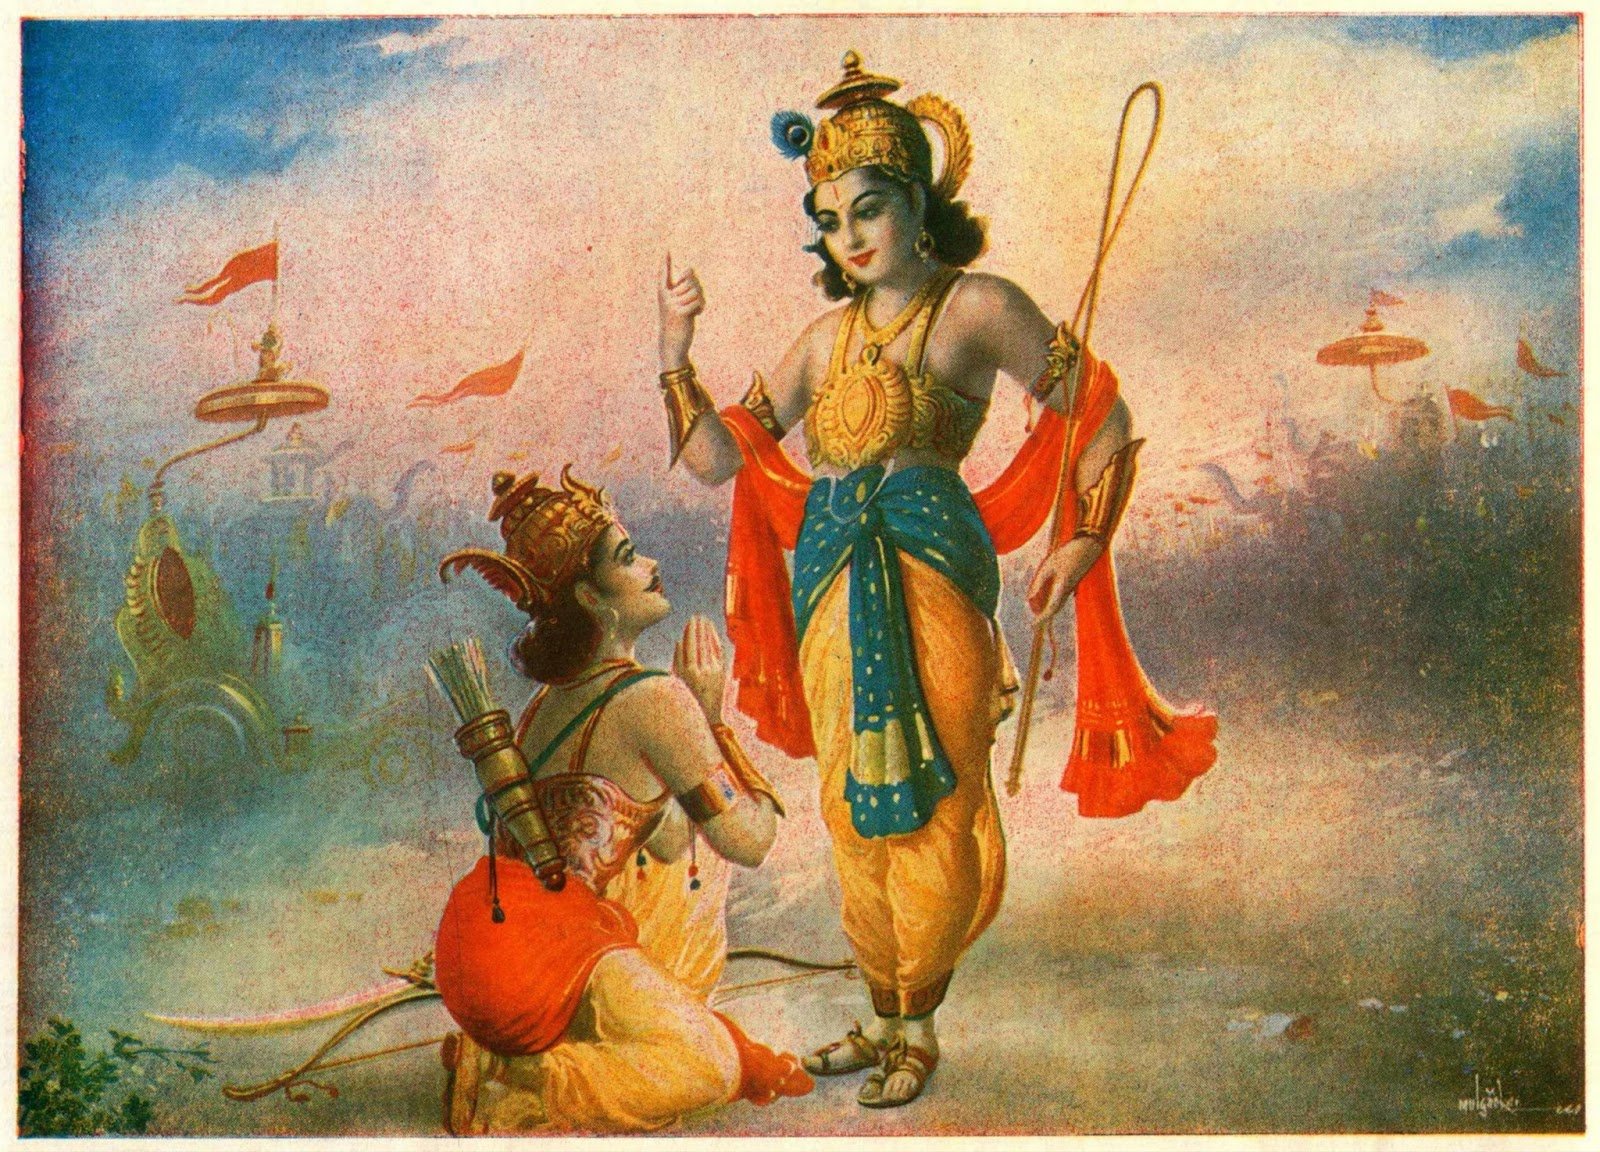 Featured image: Bhagad gita - Read full post: COVID-19 and The Bhagavad Gita